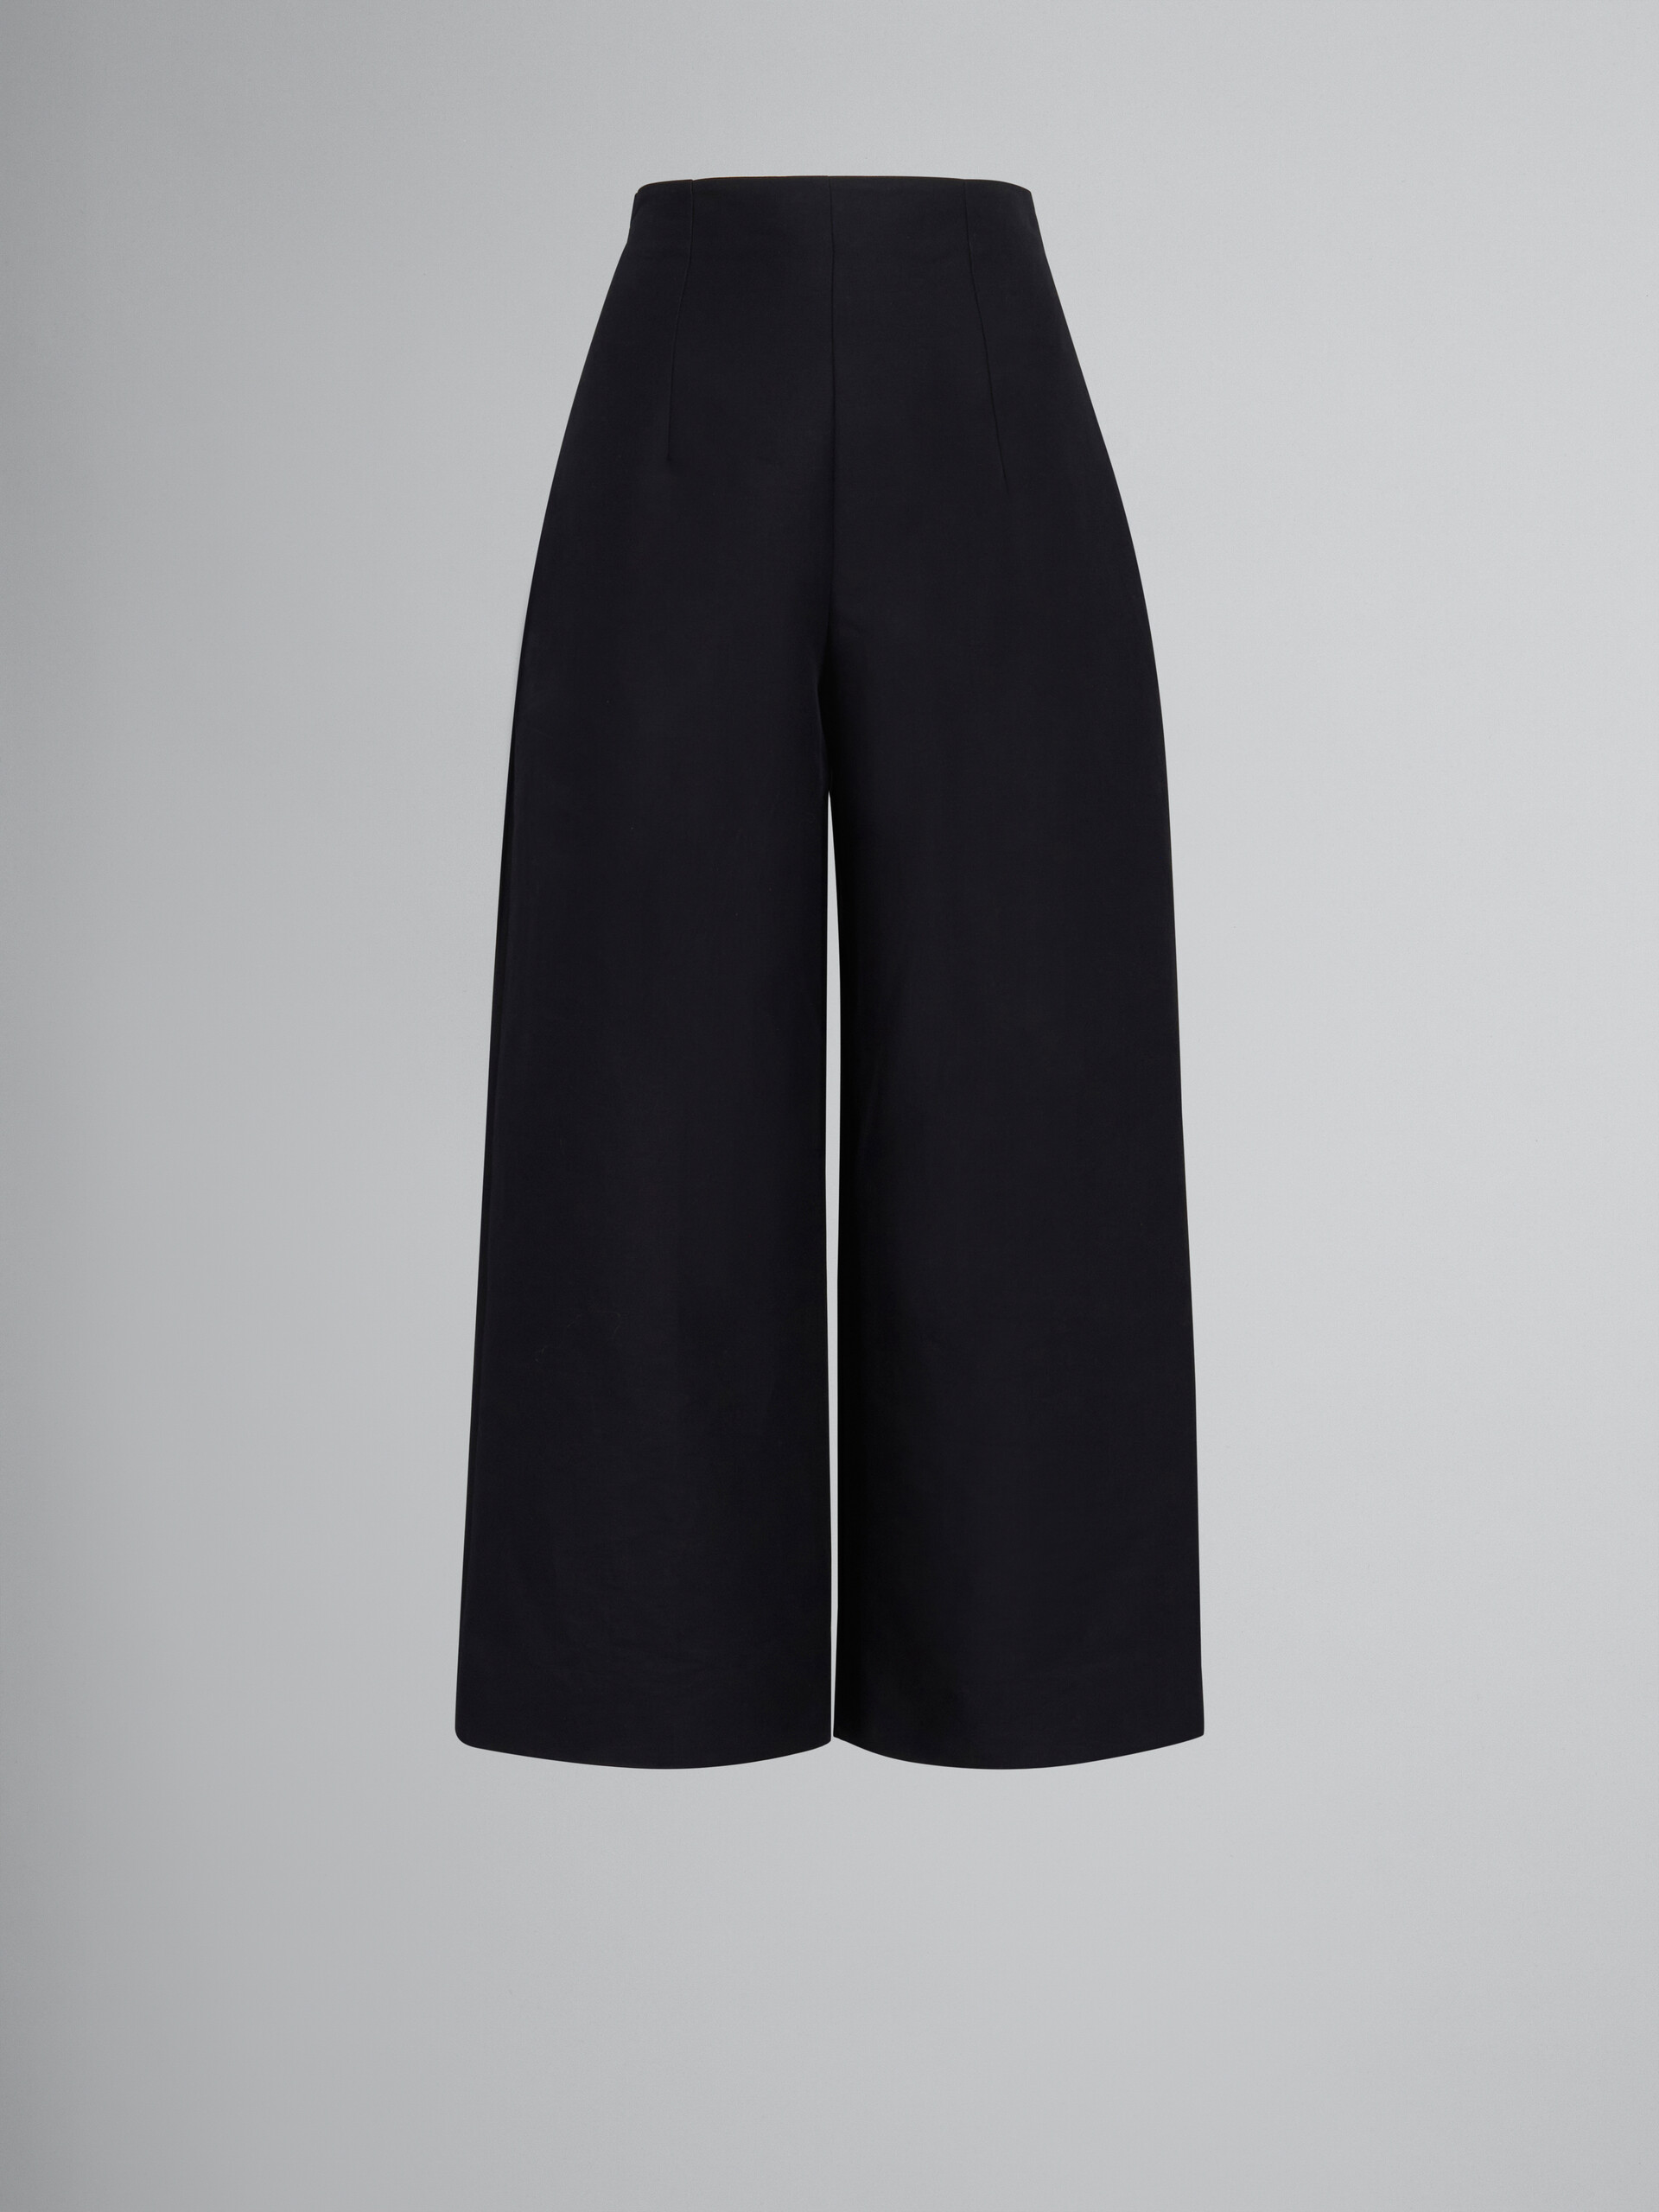 Pantalón capri de cady negro - Pantalones - Image 1